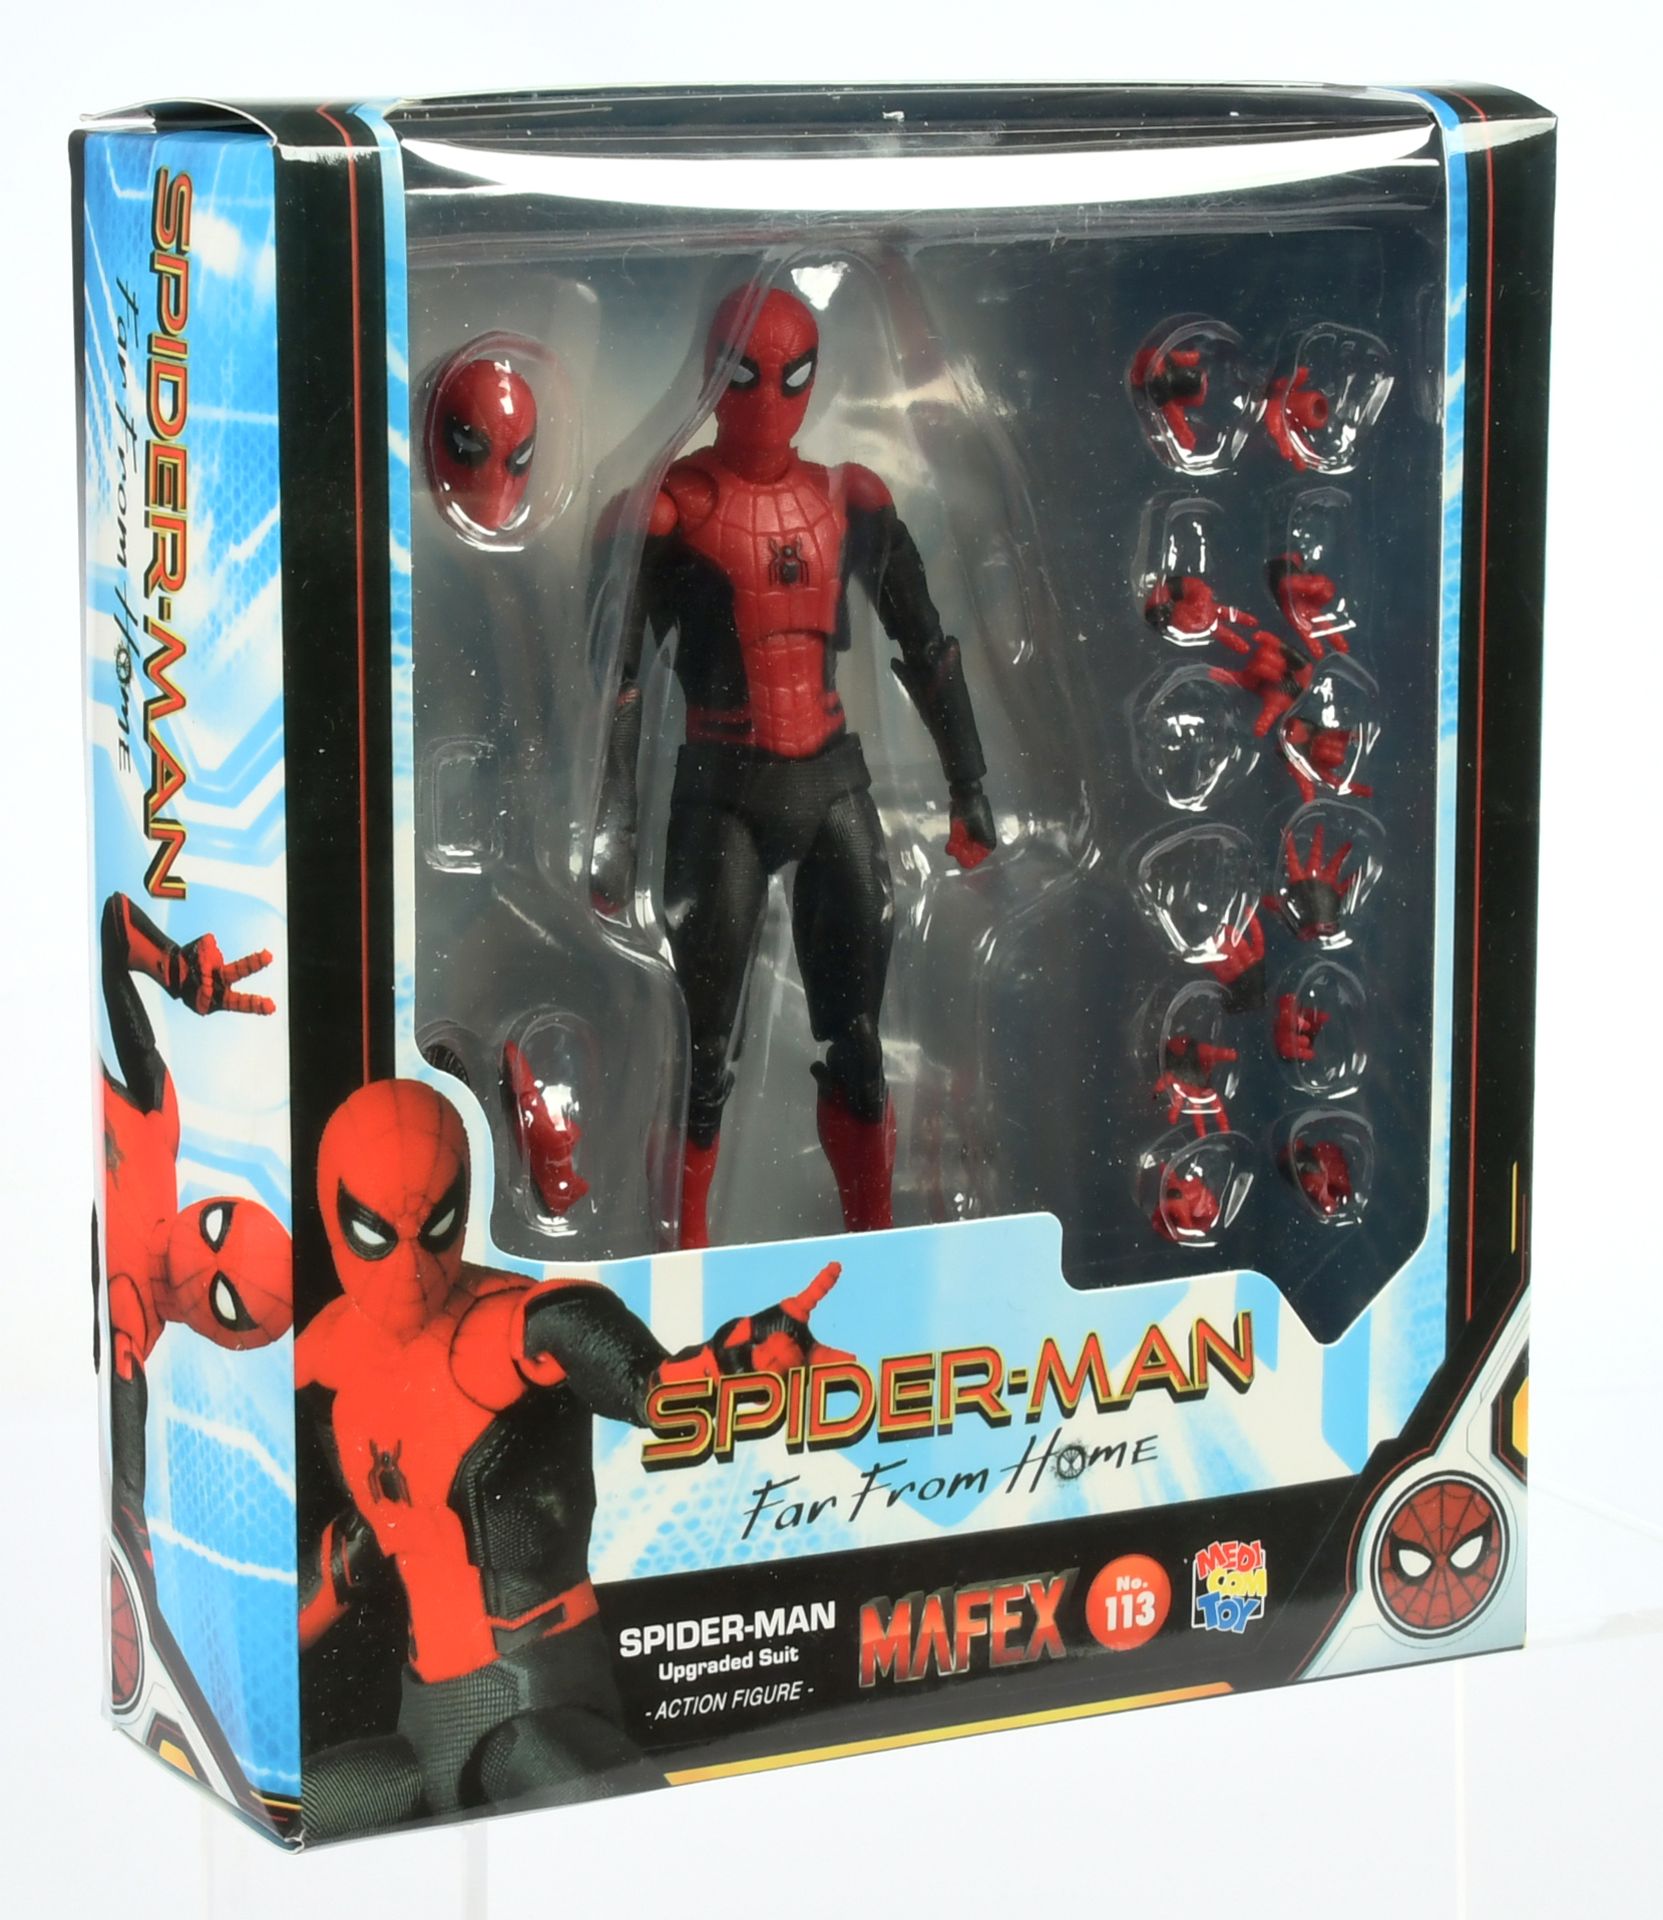 Medicom Toy Marvel Spider-man Far From Home figure